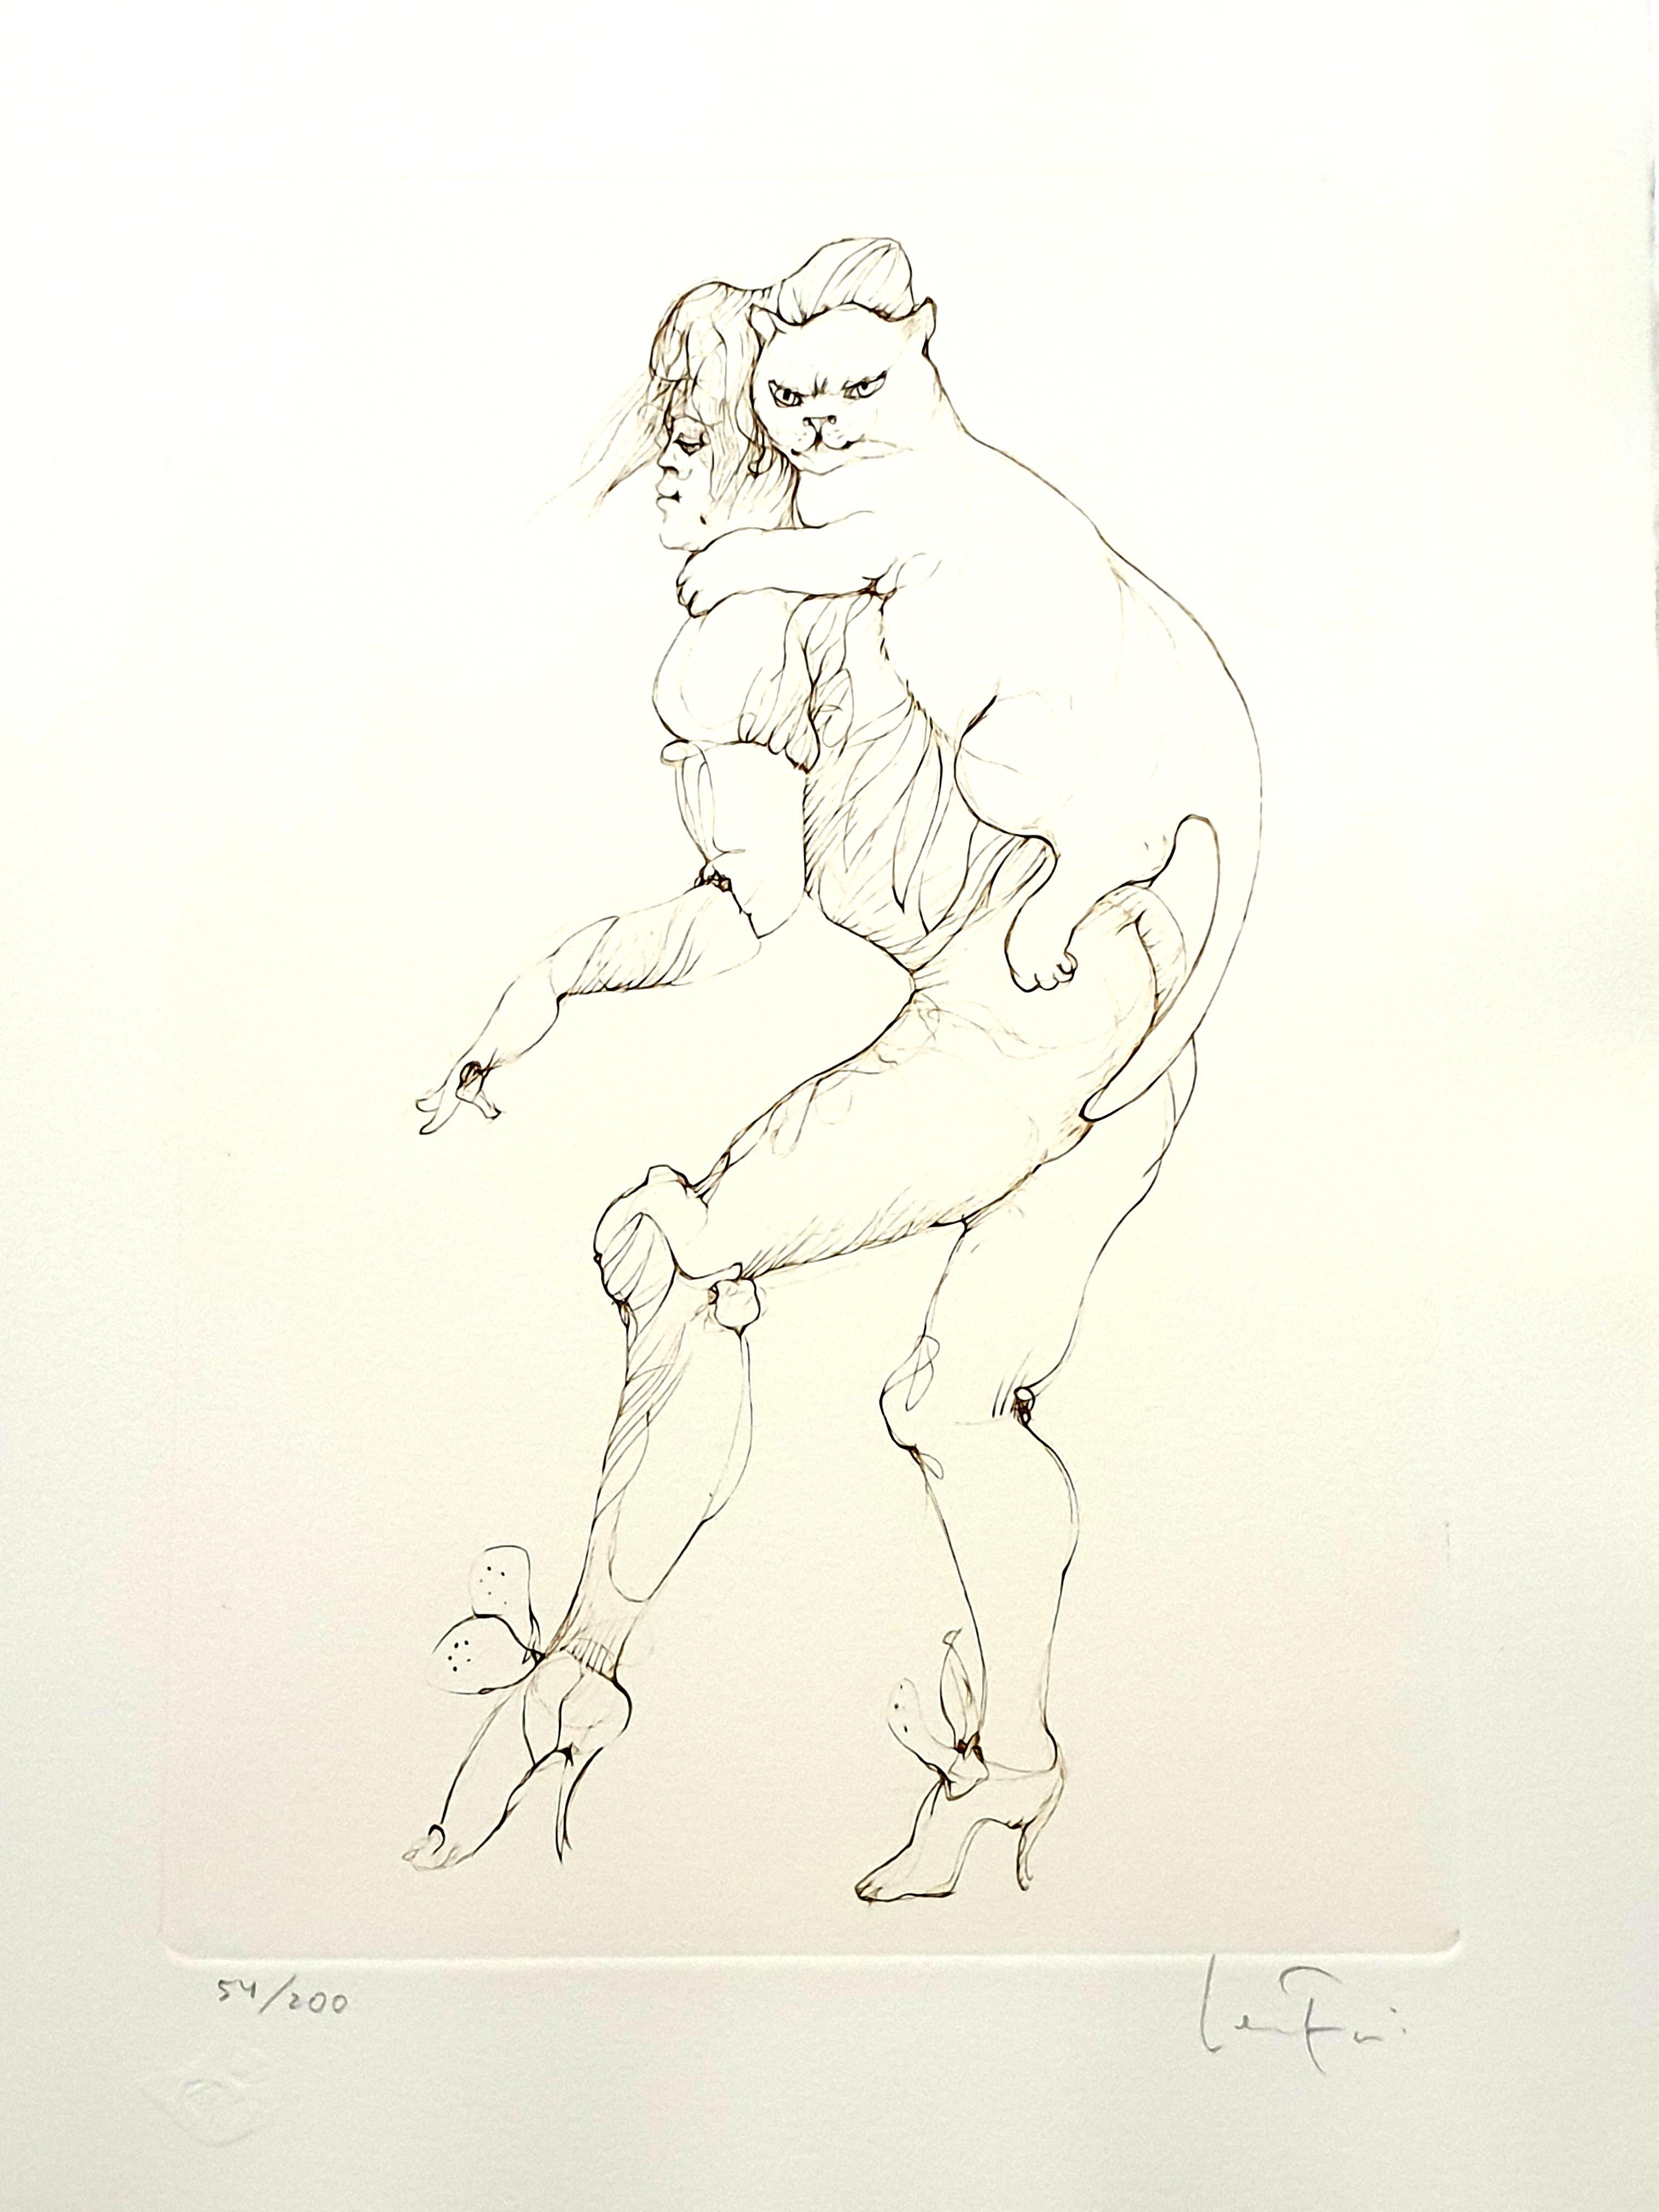 Leonor Fini - Heavy Cat - Original Handsigned Lithograph
Les Elus de la Nuit
1986
Conditions: excellent
Handsigned and Numbered
Edition: 230
Dimensions: 38 x 28 cm 
Editions: Trinckvel, Paris